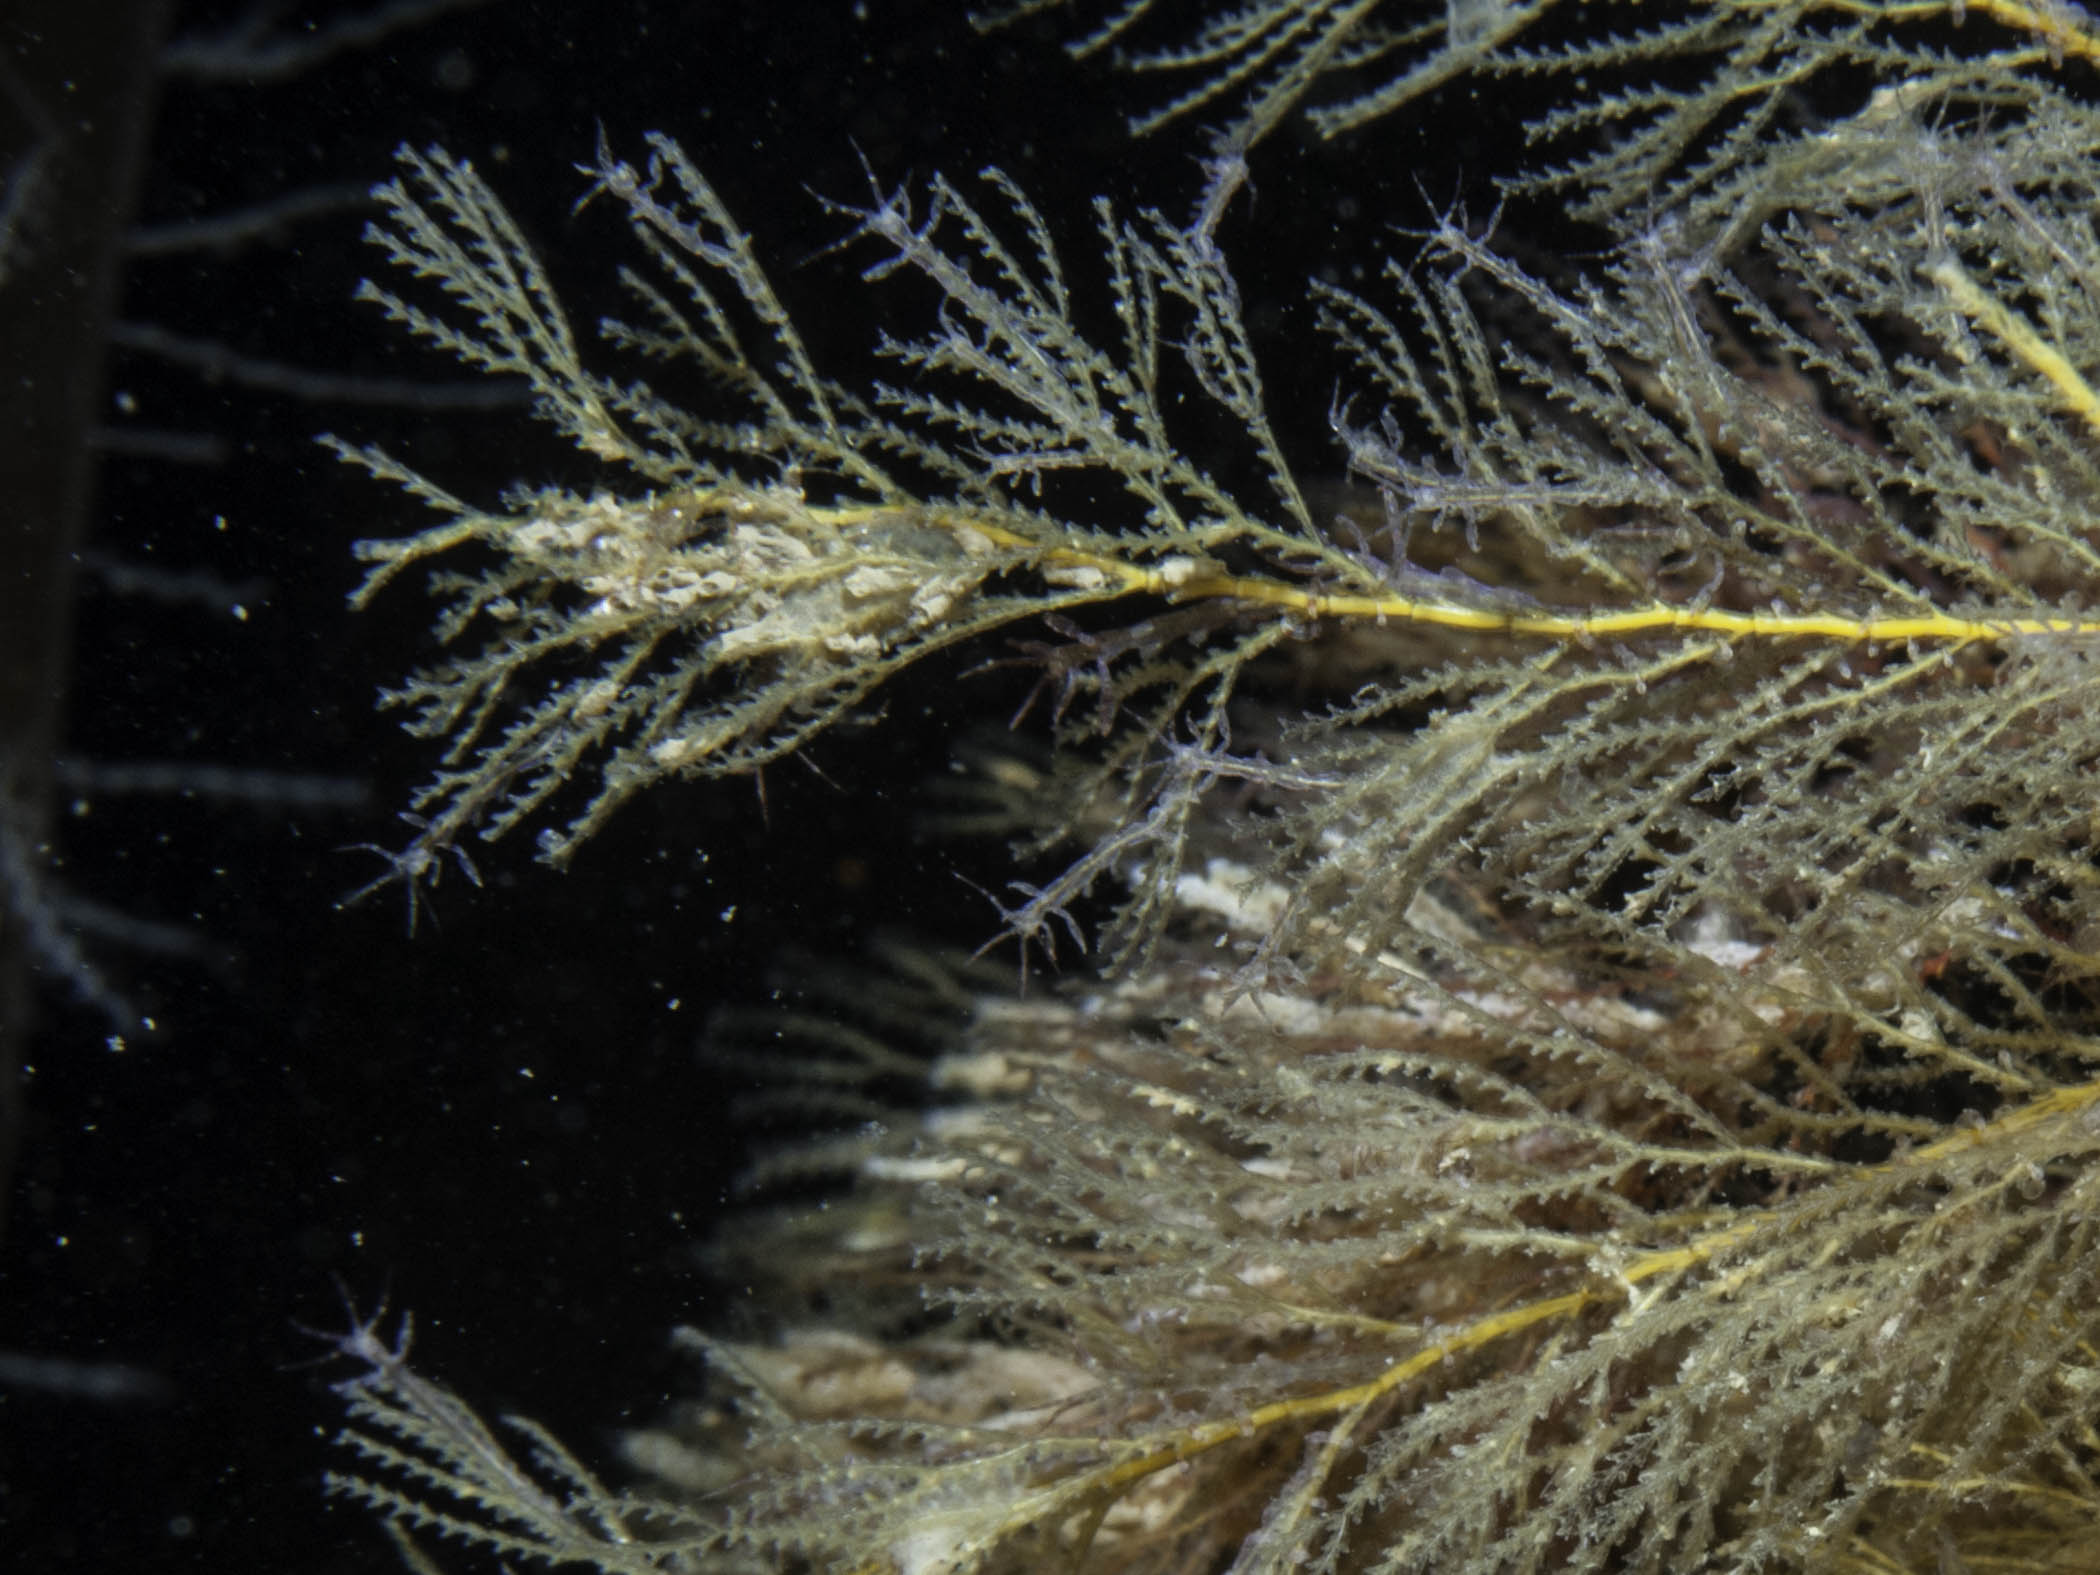 image: Sertularia argentea. Close-up photograph showing sub-alternate arrangement of hydrothecae.